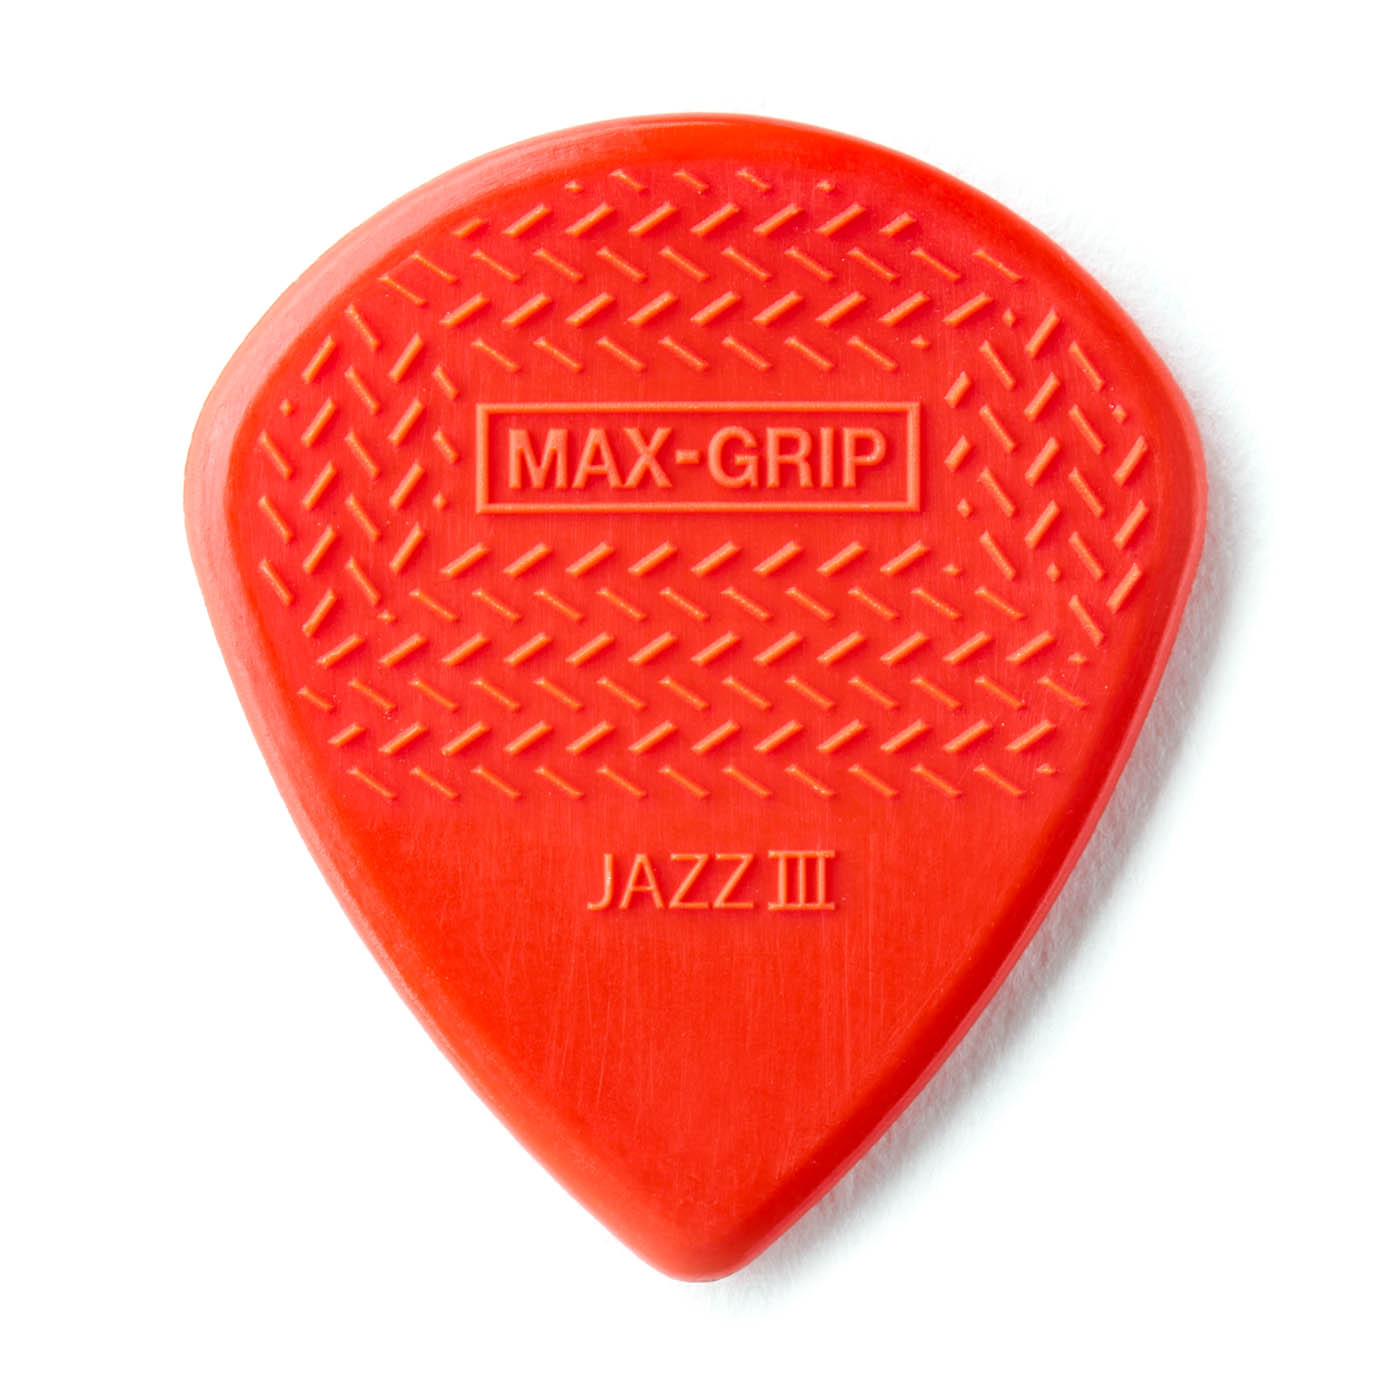 DUNLOP Mediators Max-Grip Jazz III x 24 Nylon